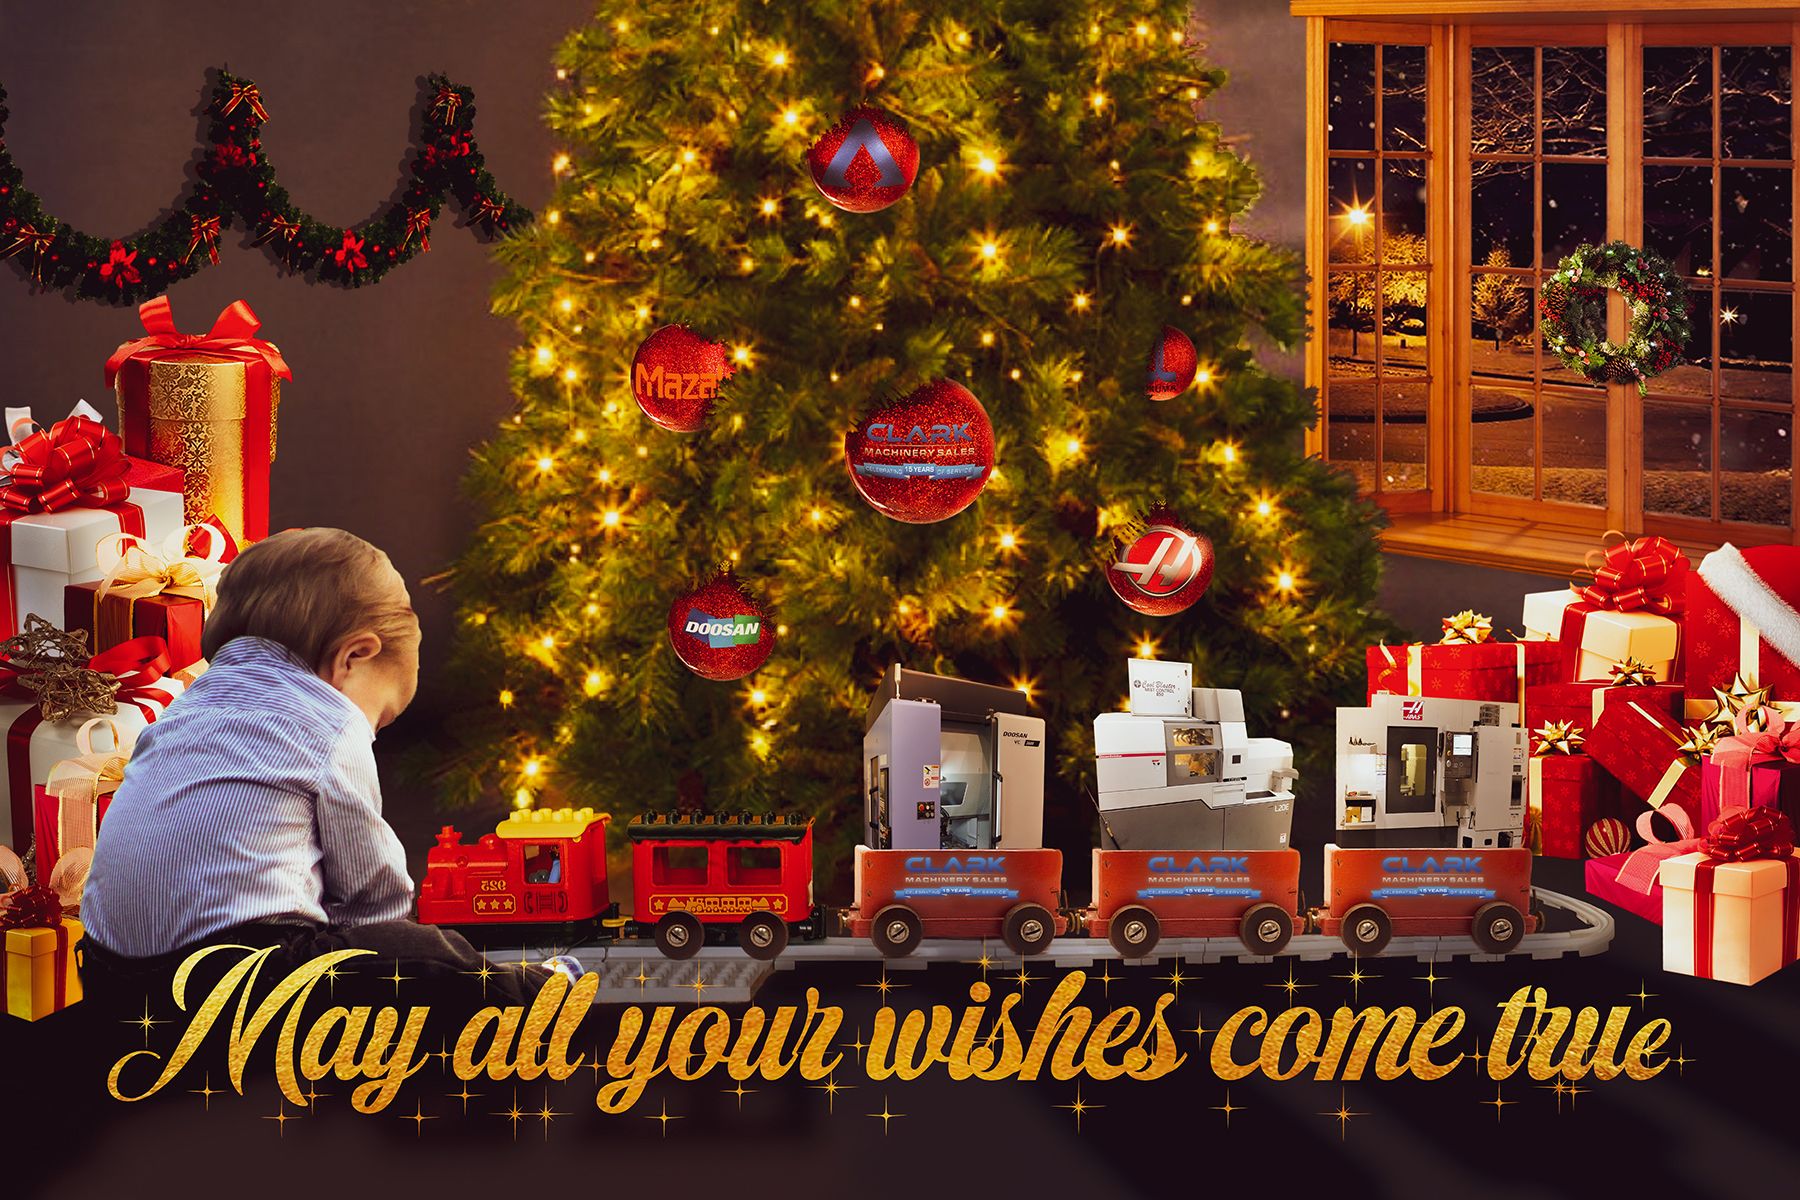 Wishing You a Wonderful Holiday Season!